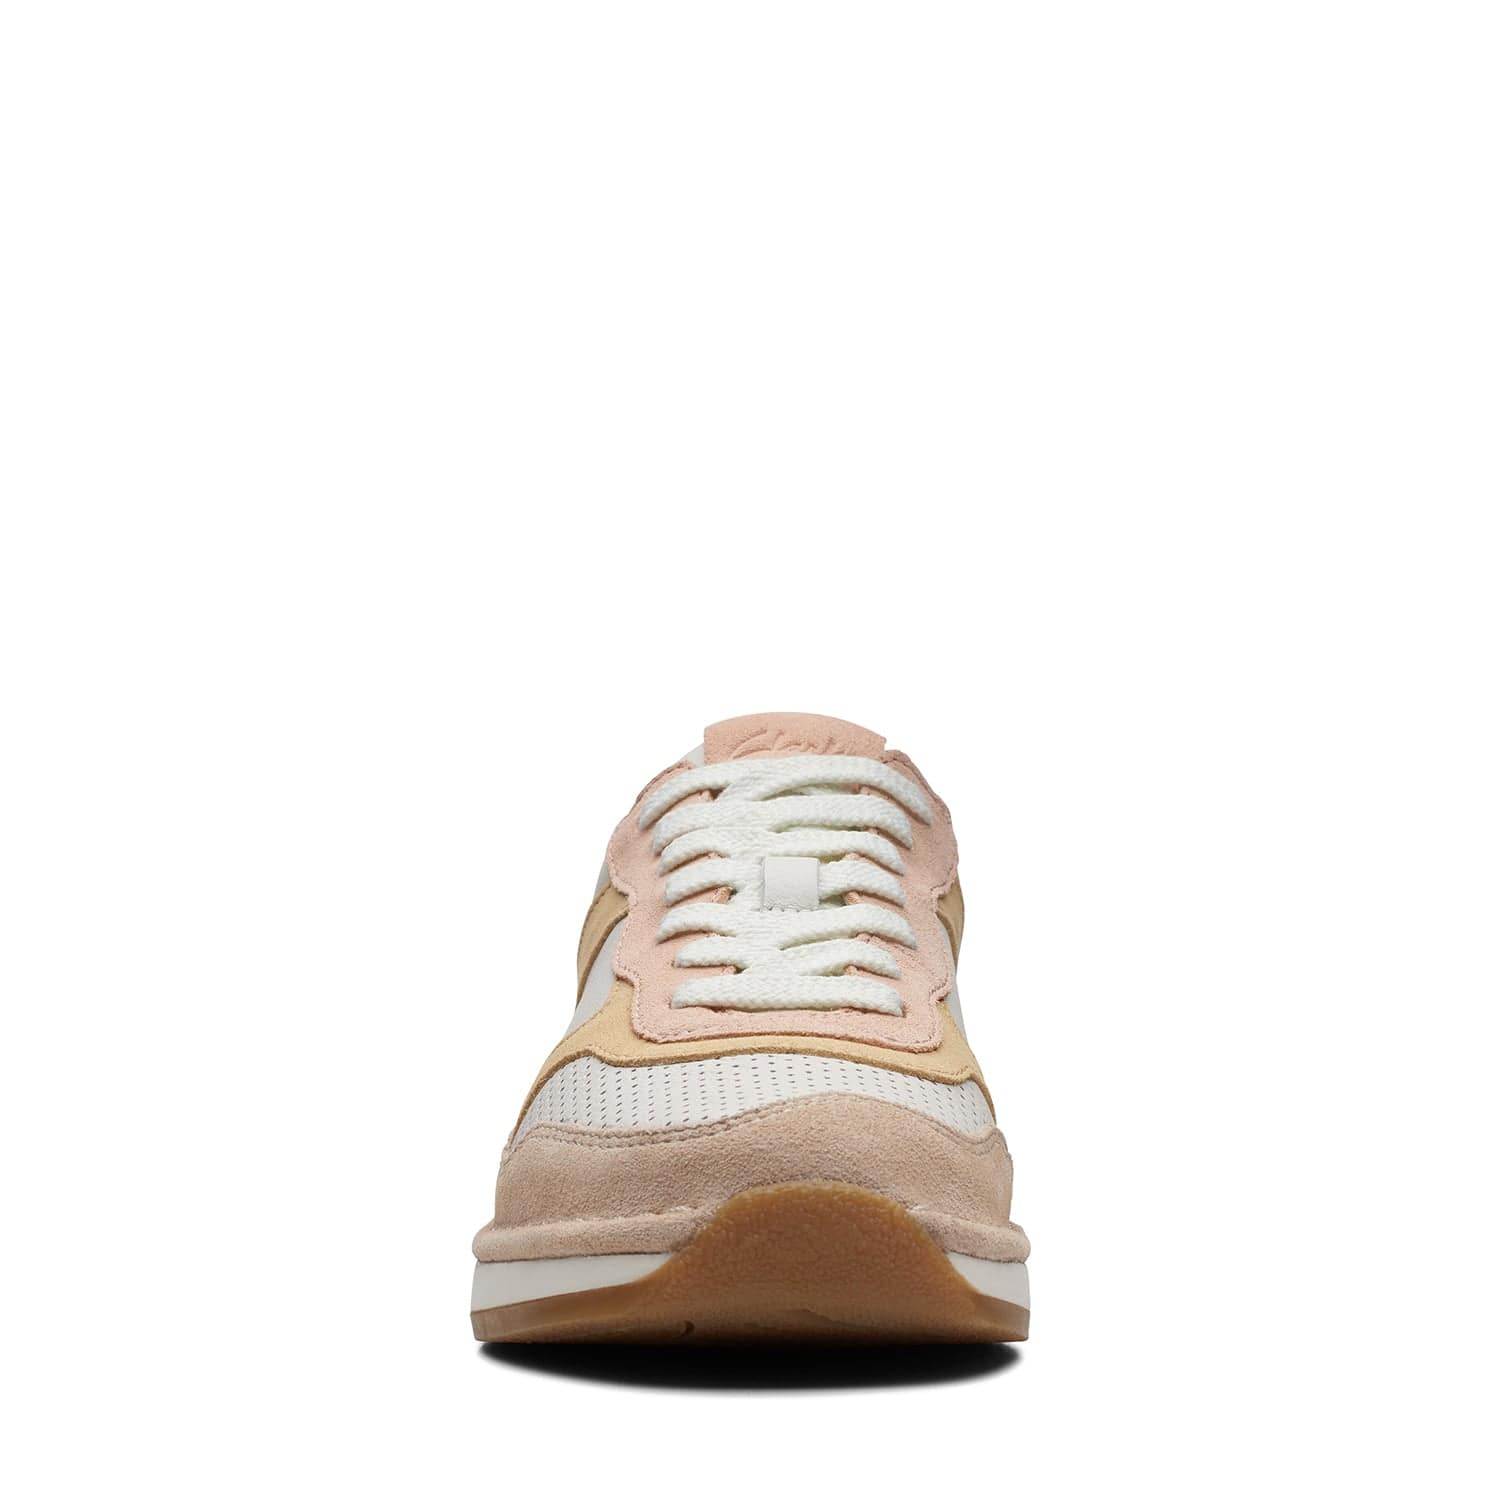 Clarks Craftrun Tor. - Shoes - Pale Peach - 261700355 - E Width (Wide Fit)